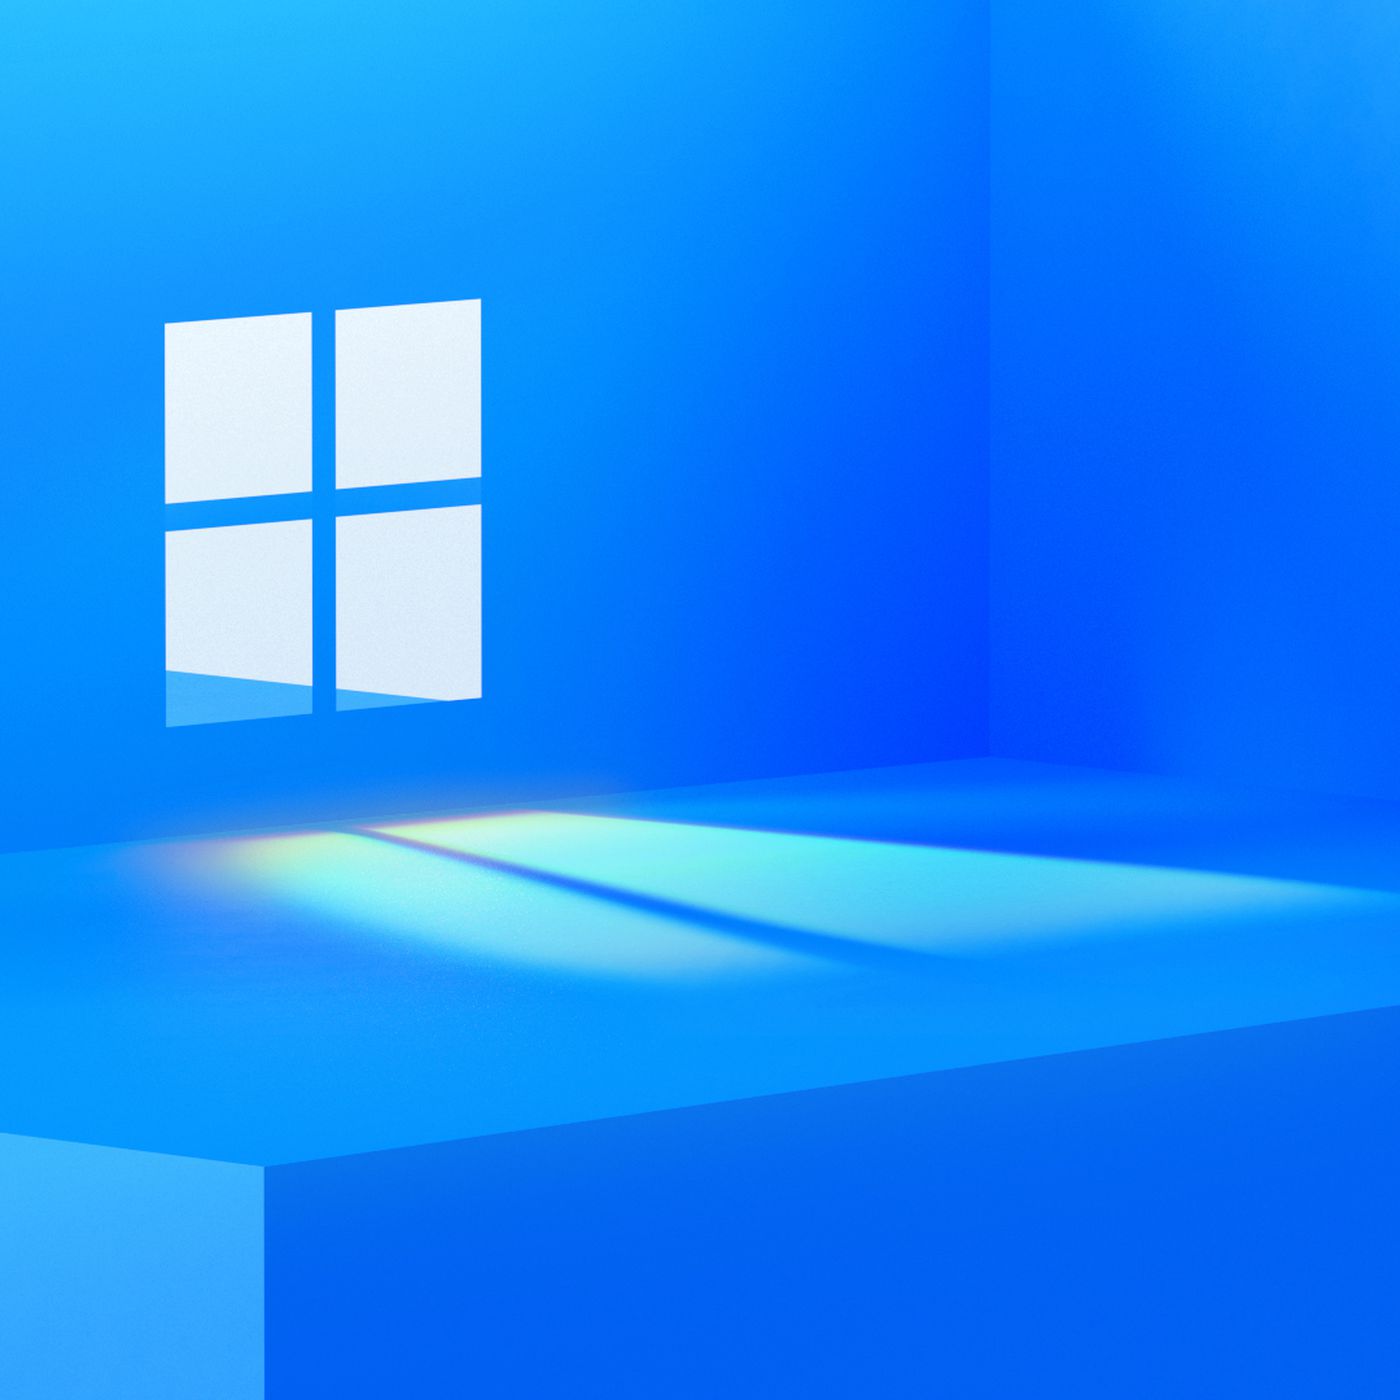 Windows 12 may arrive in 2024 in major Microsoft shakeup